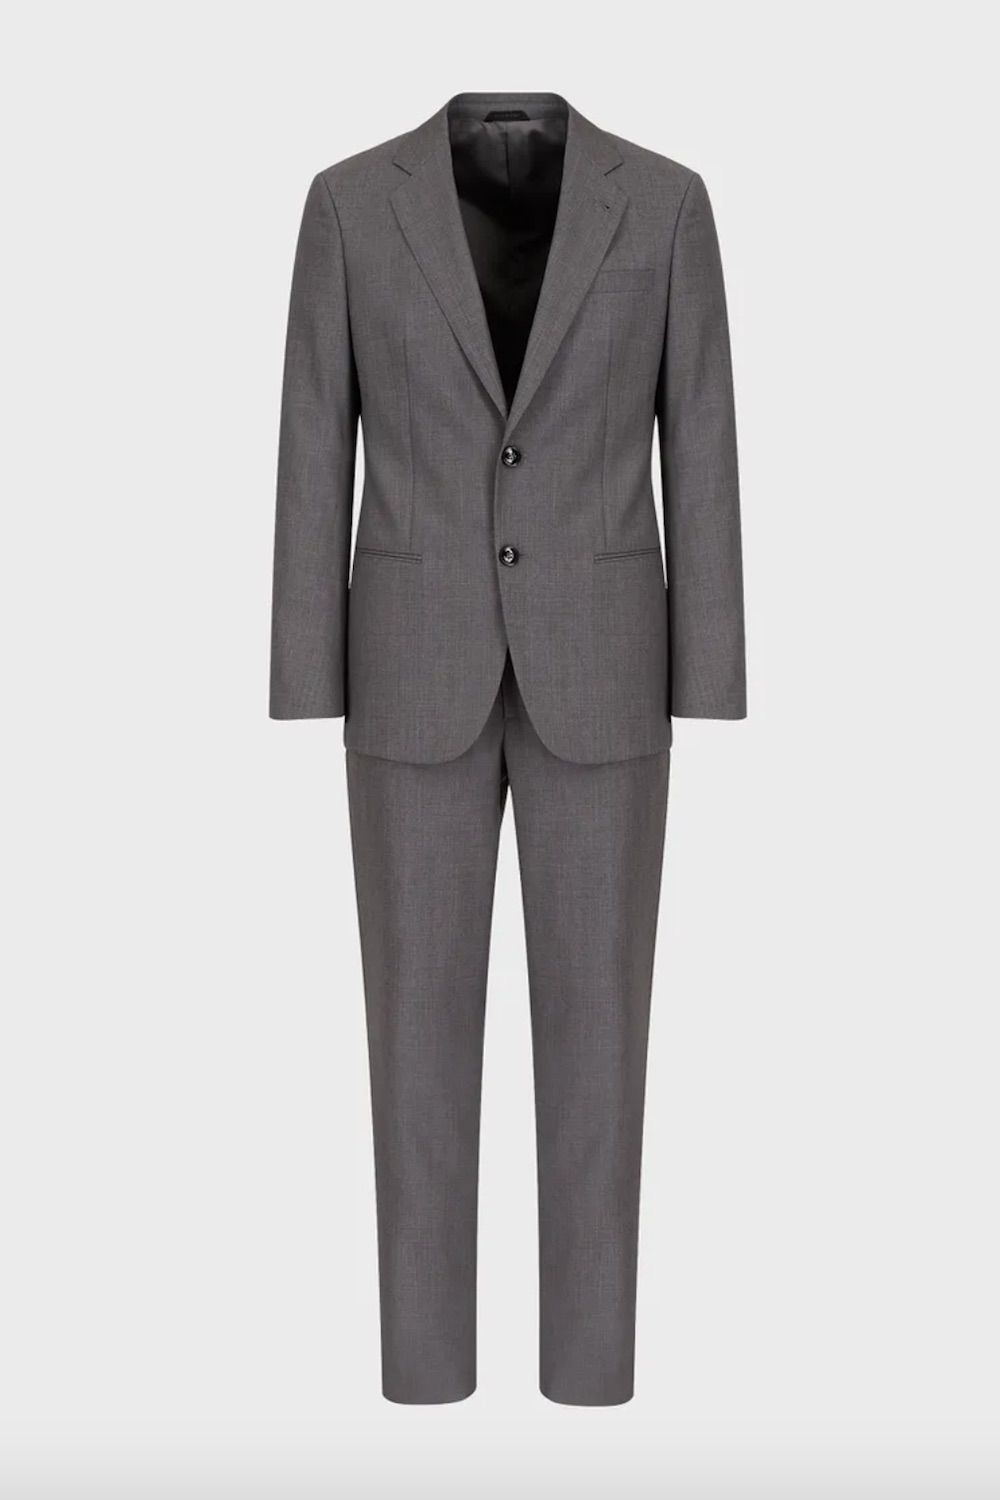 Giorgio Armani Soho Line Wool and Cashmere Single-Breasted Suit